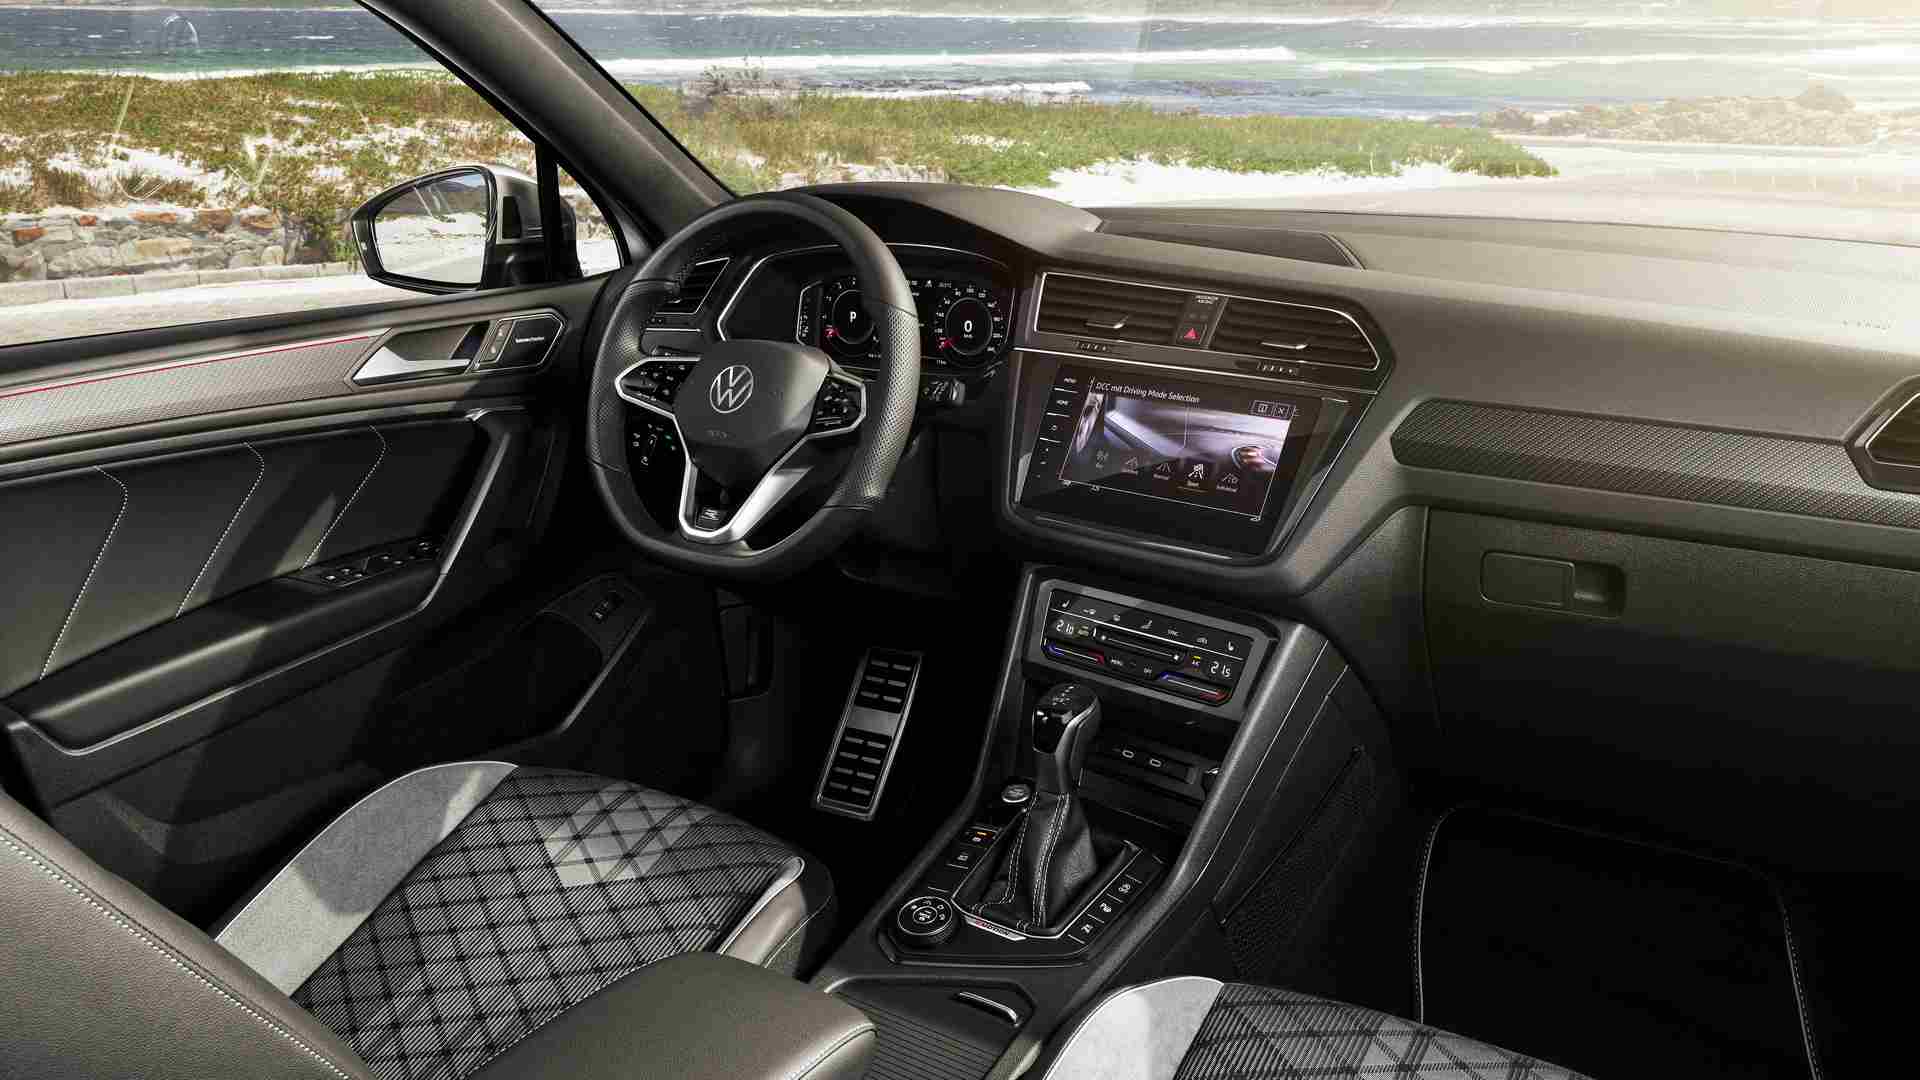 A 9.2-inch touchscreen runs Volkswagen's new MIB3 infotainment system. Image: Volkswagen